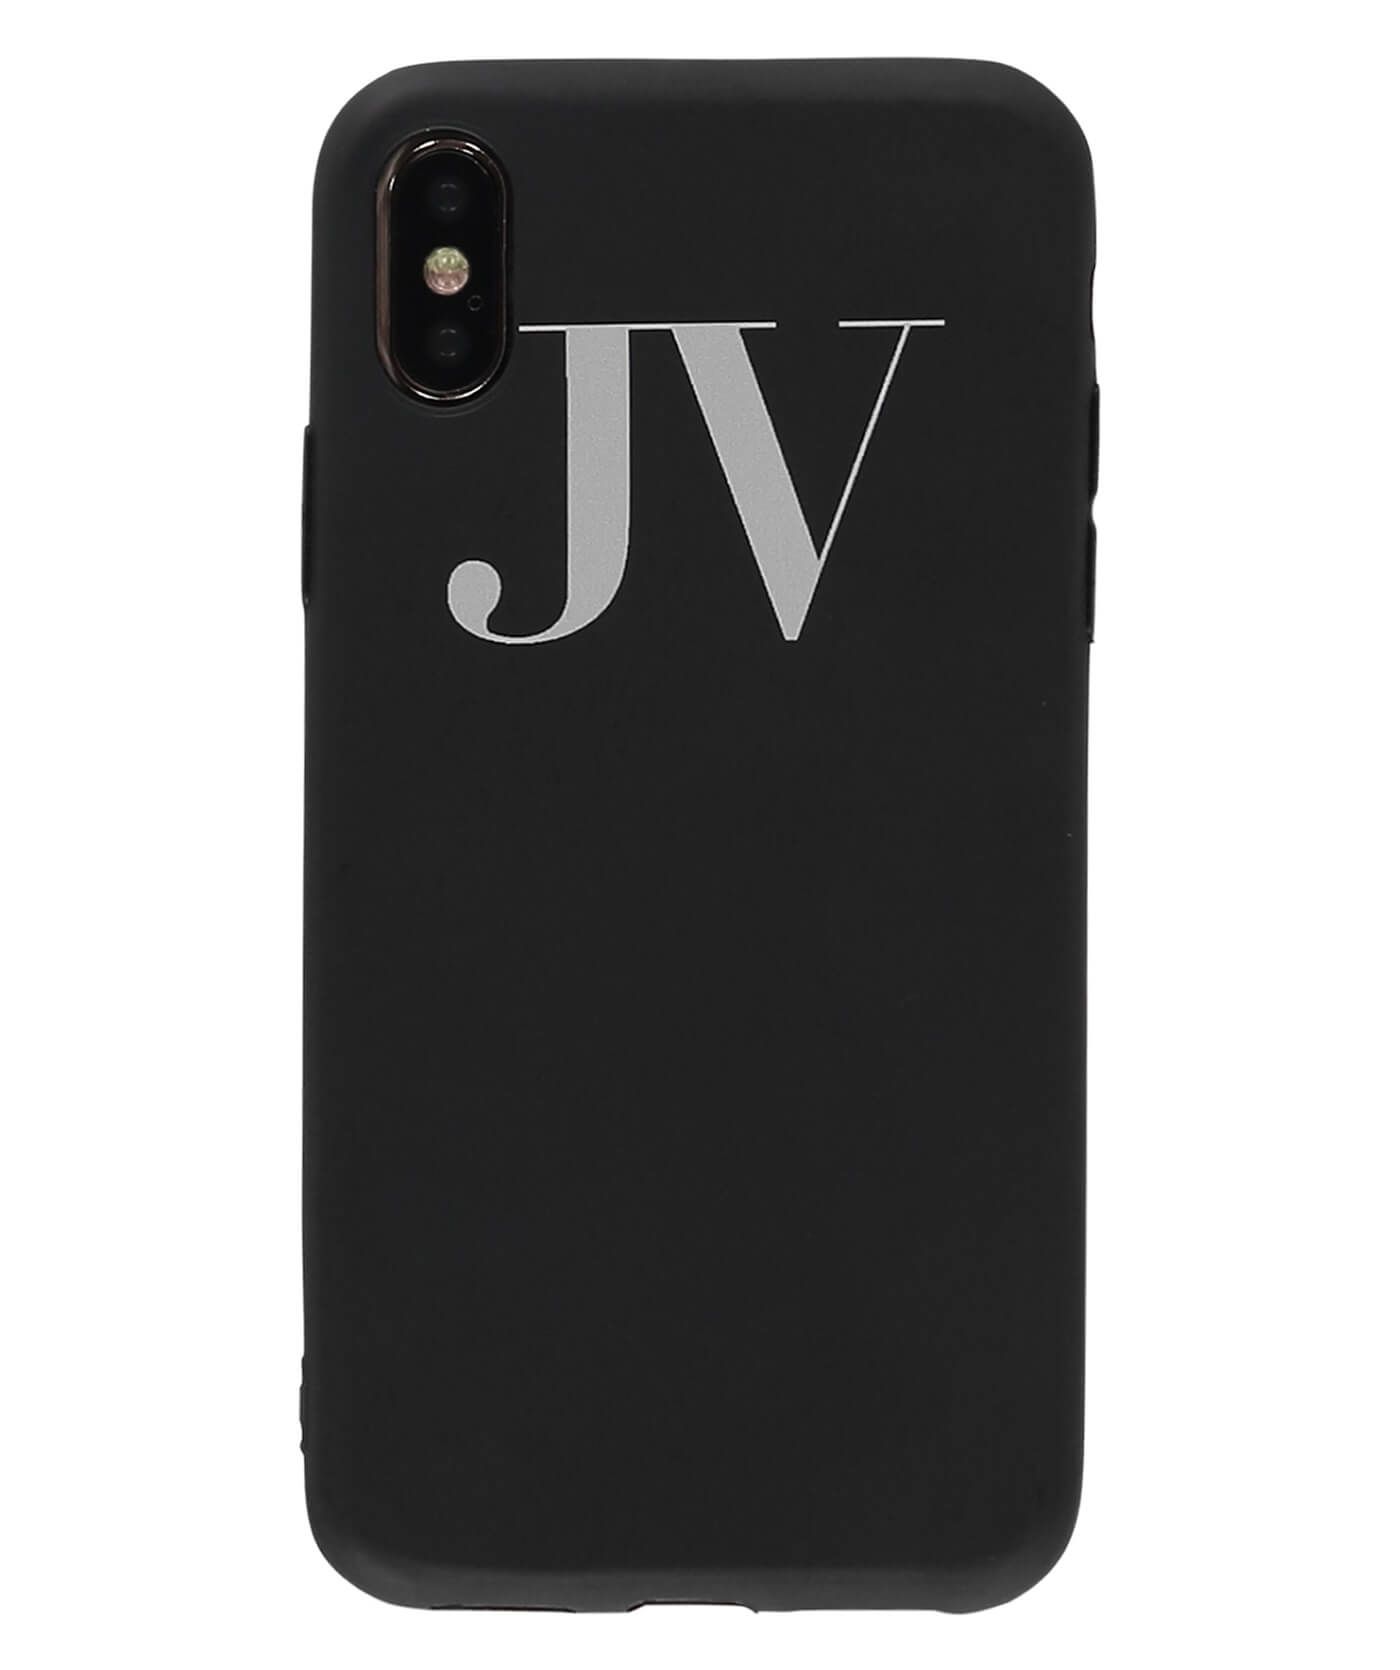 IPHONE JV Case